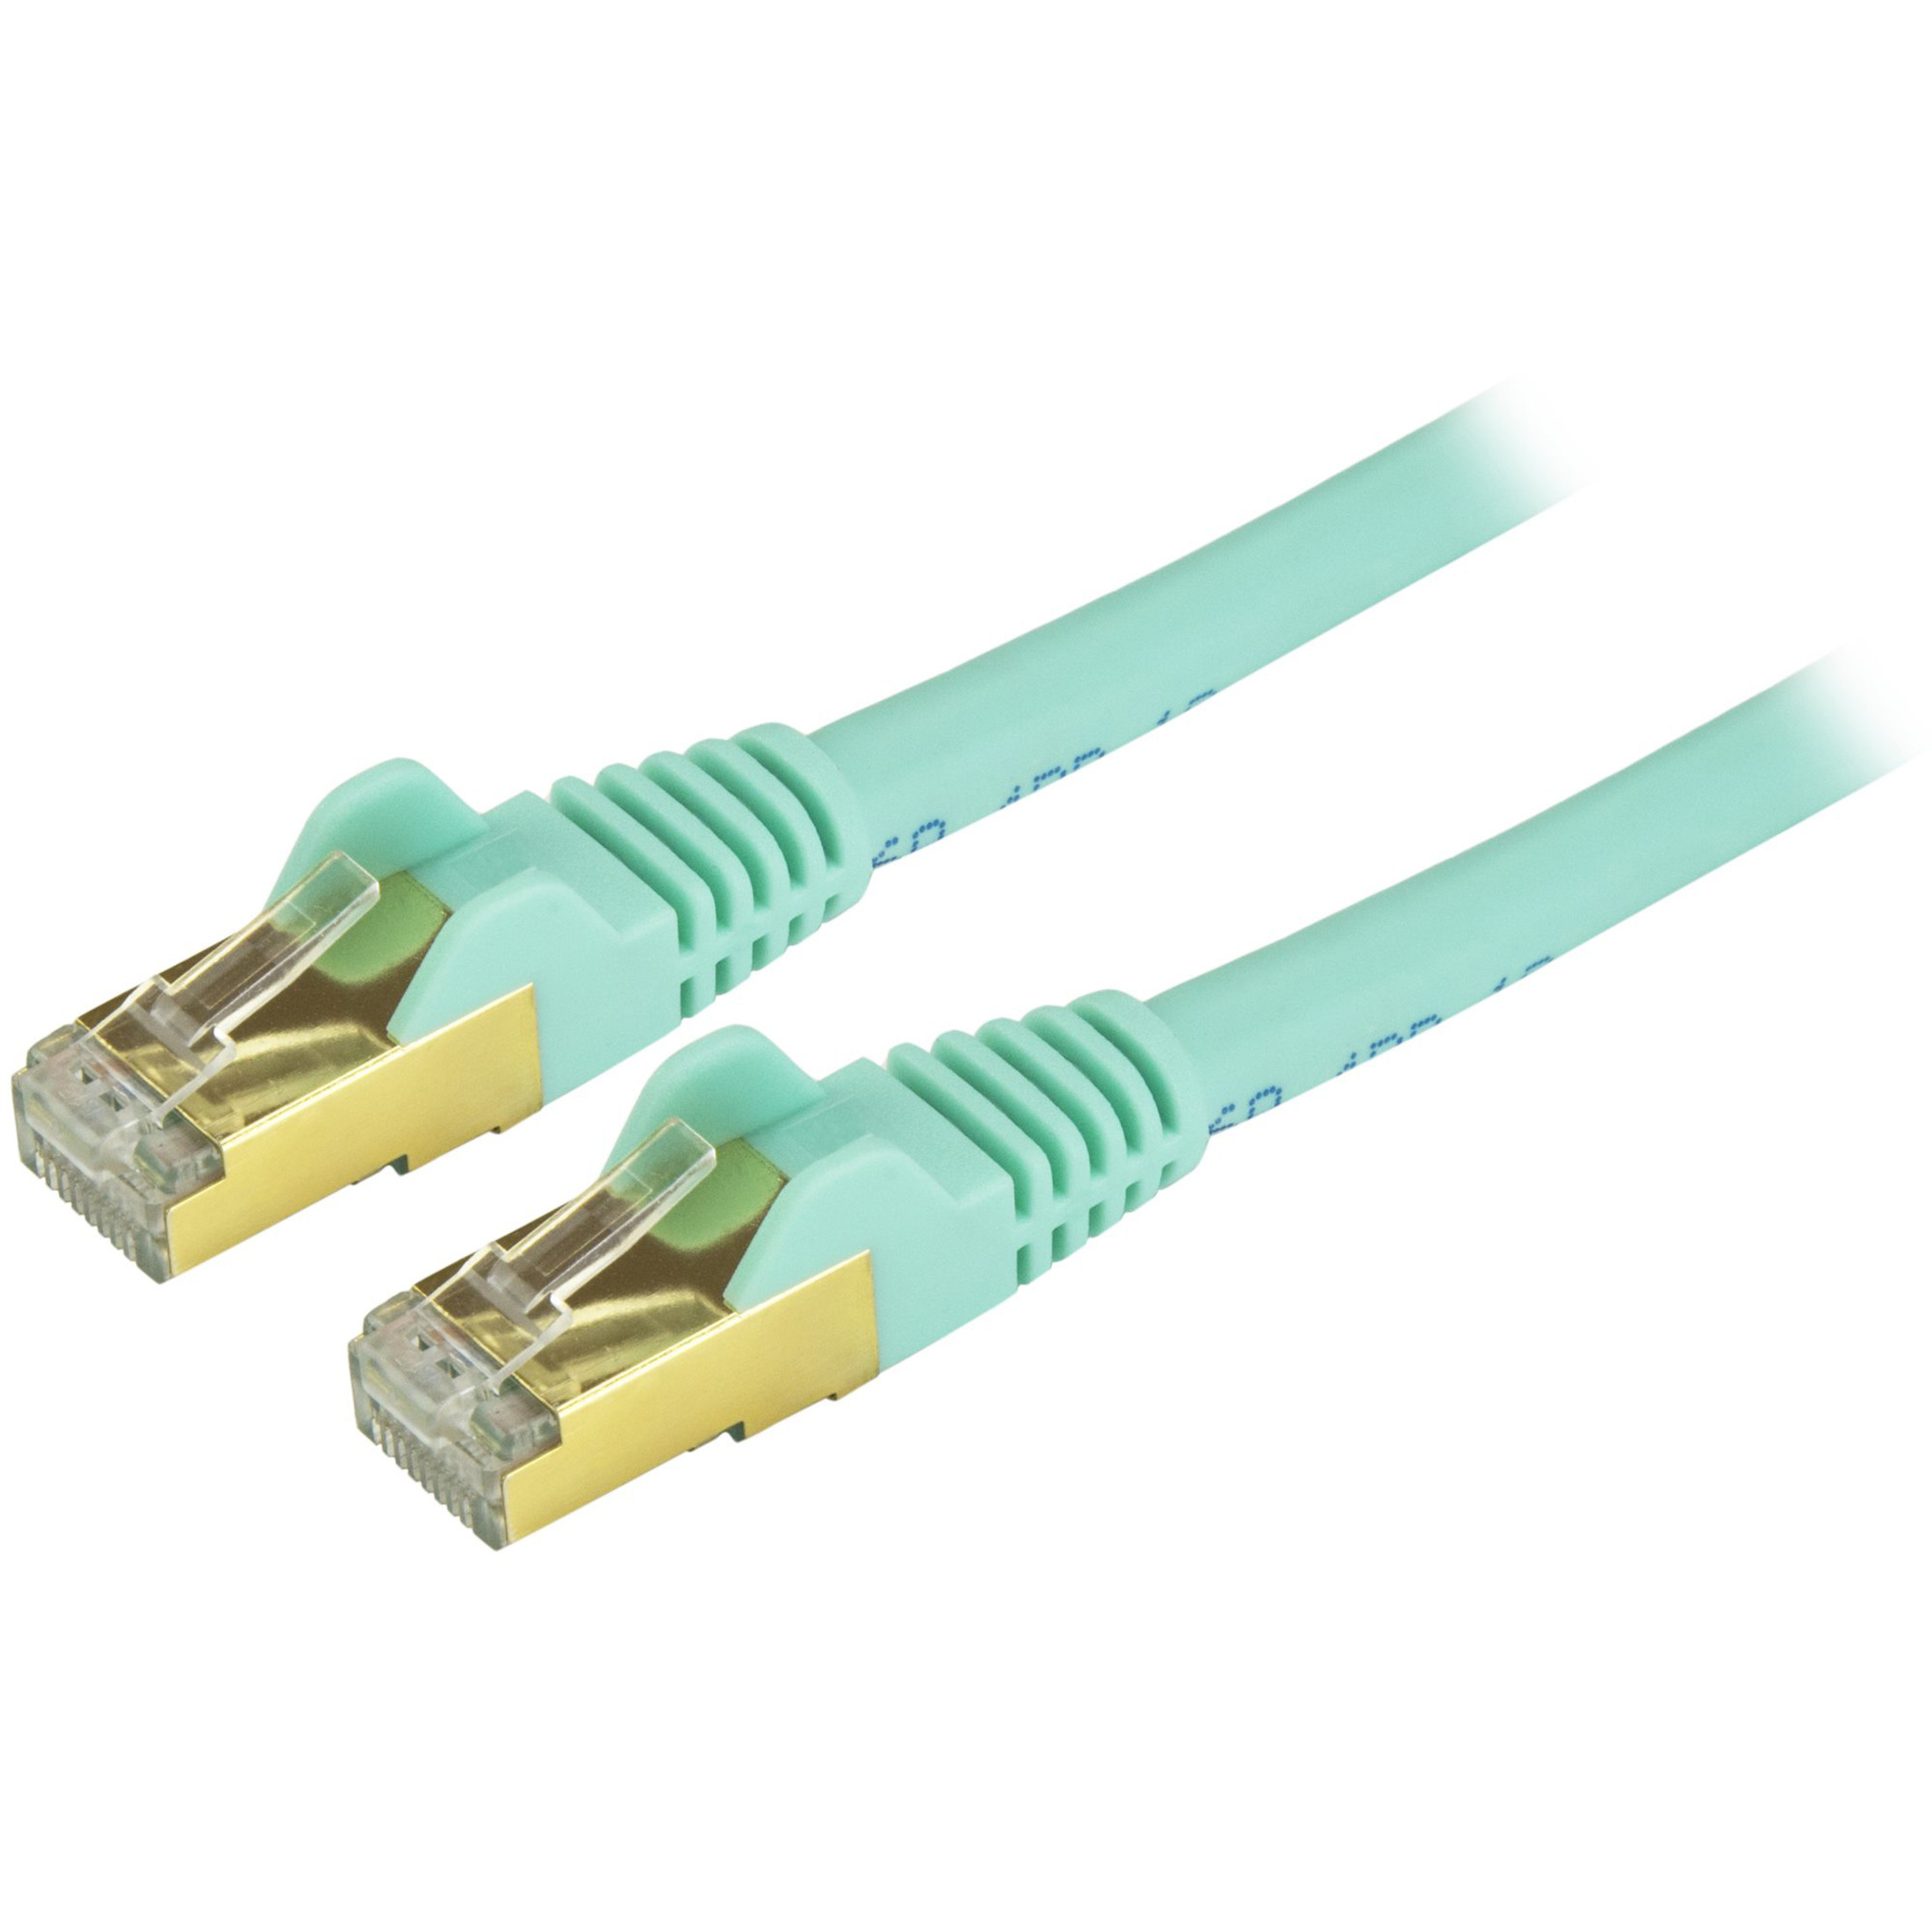 Startech .com 8ft CAT6a Ethernet Cable10 Gigabit Category 6a Shielded Snagless 100W PoE Patch Cord10GbE Aqua UL Certified Wiring/TIAC… C6ASPAT8AQ